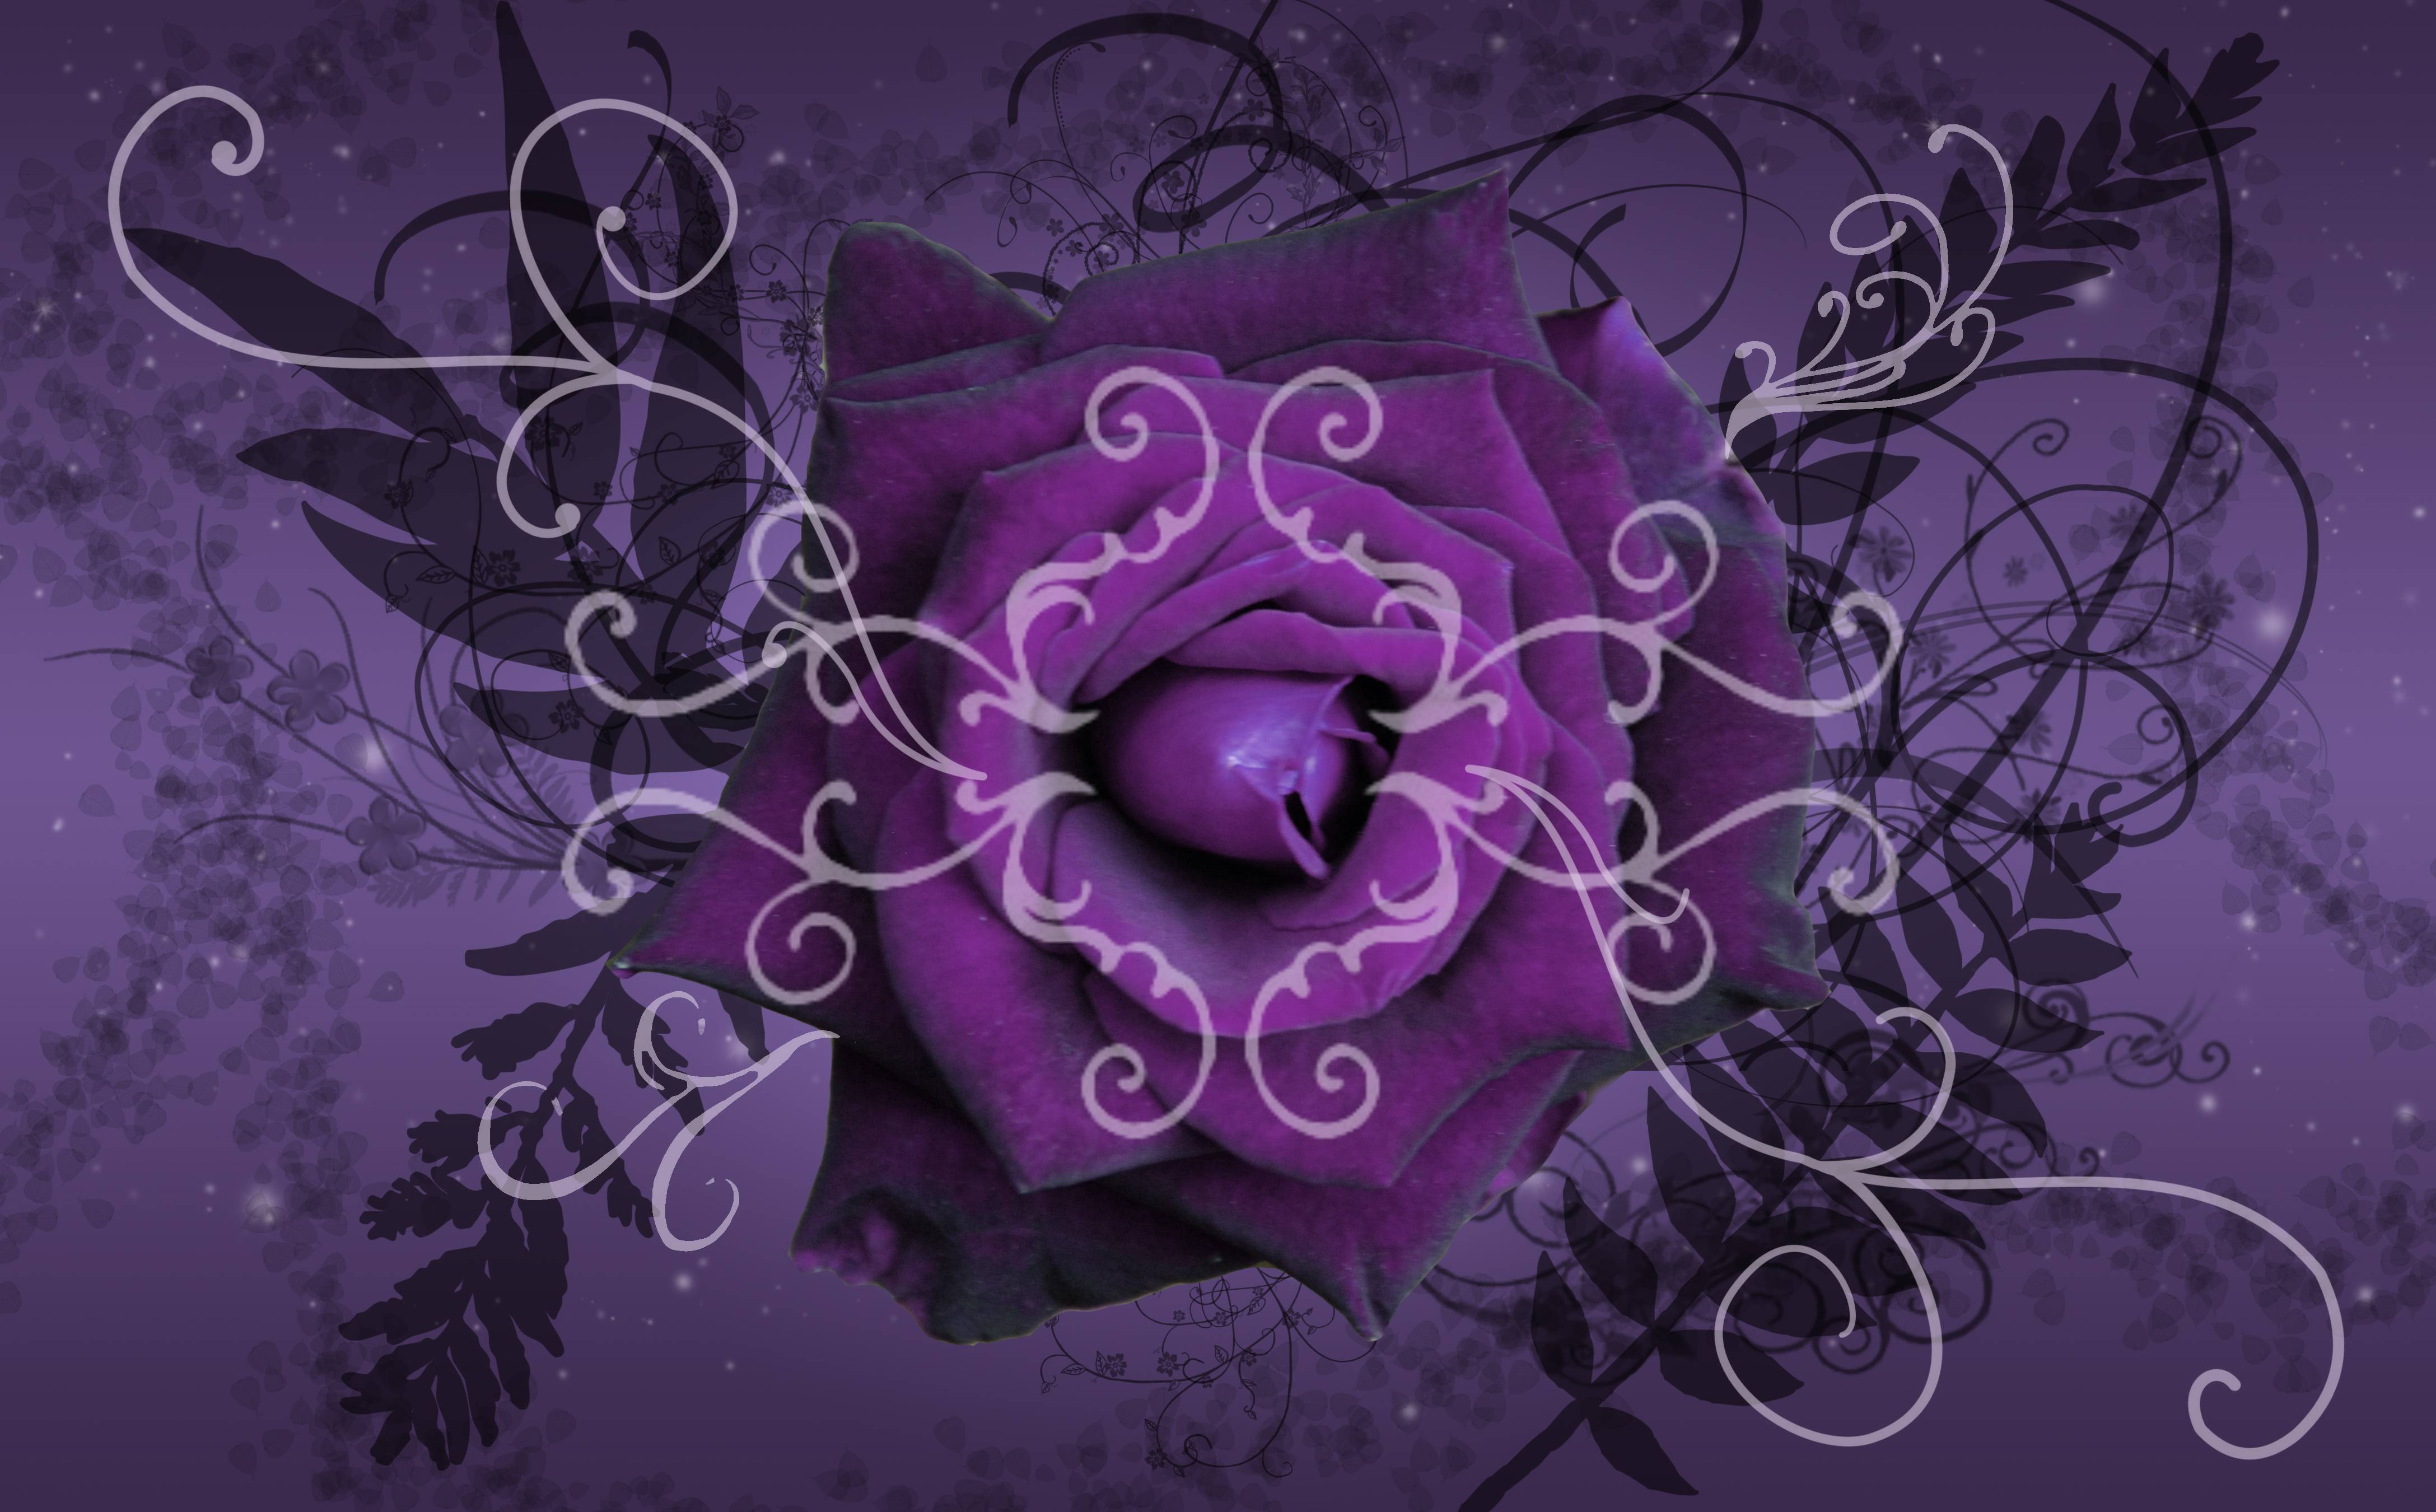 background wallpaper design hd purple